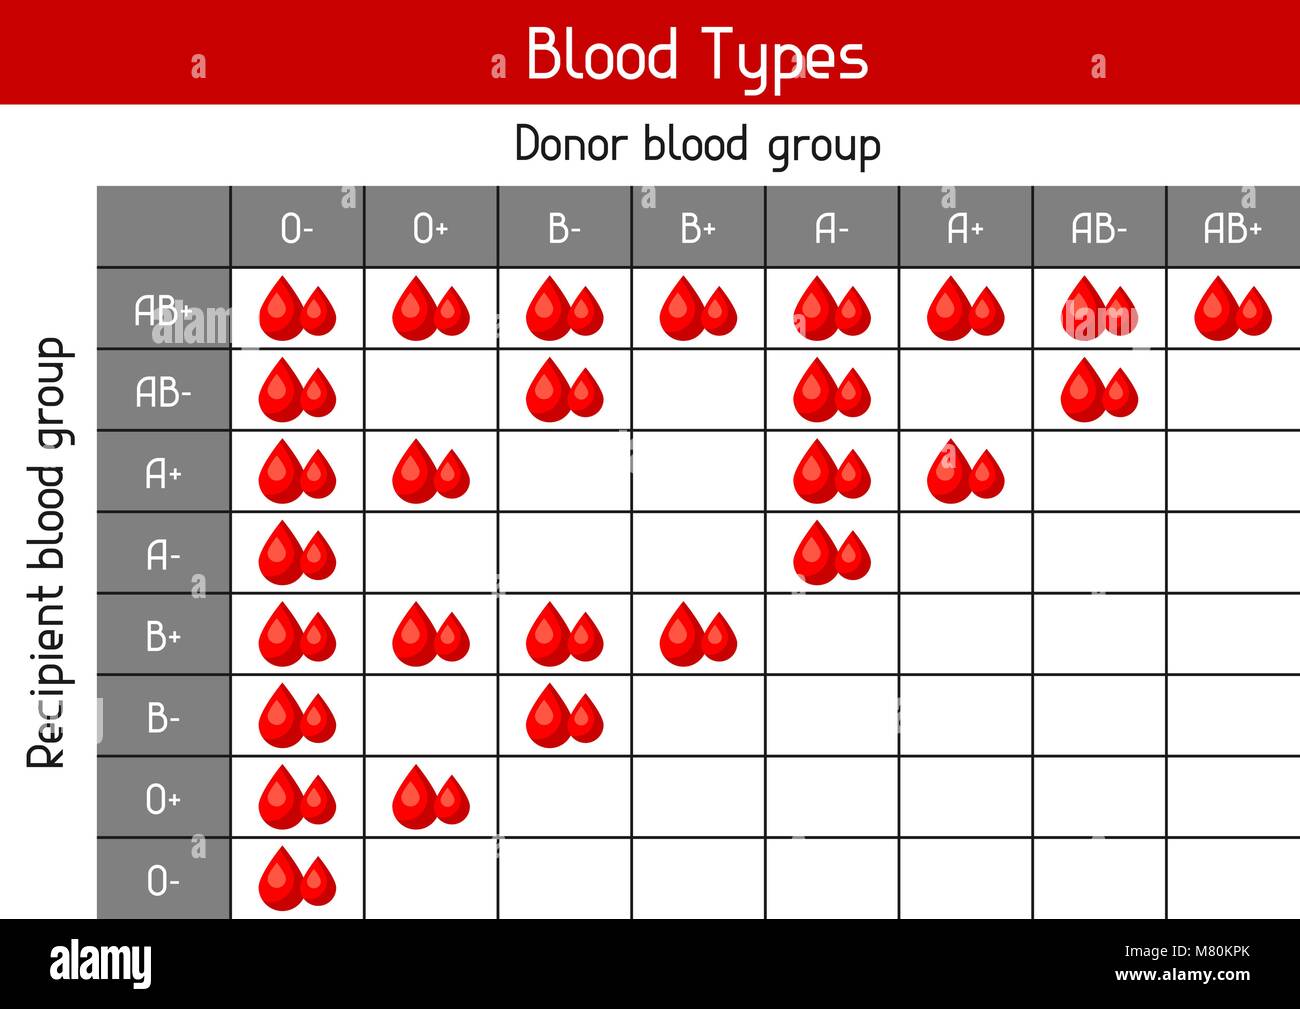 Blood Type Recipient Chart